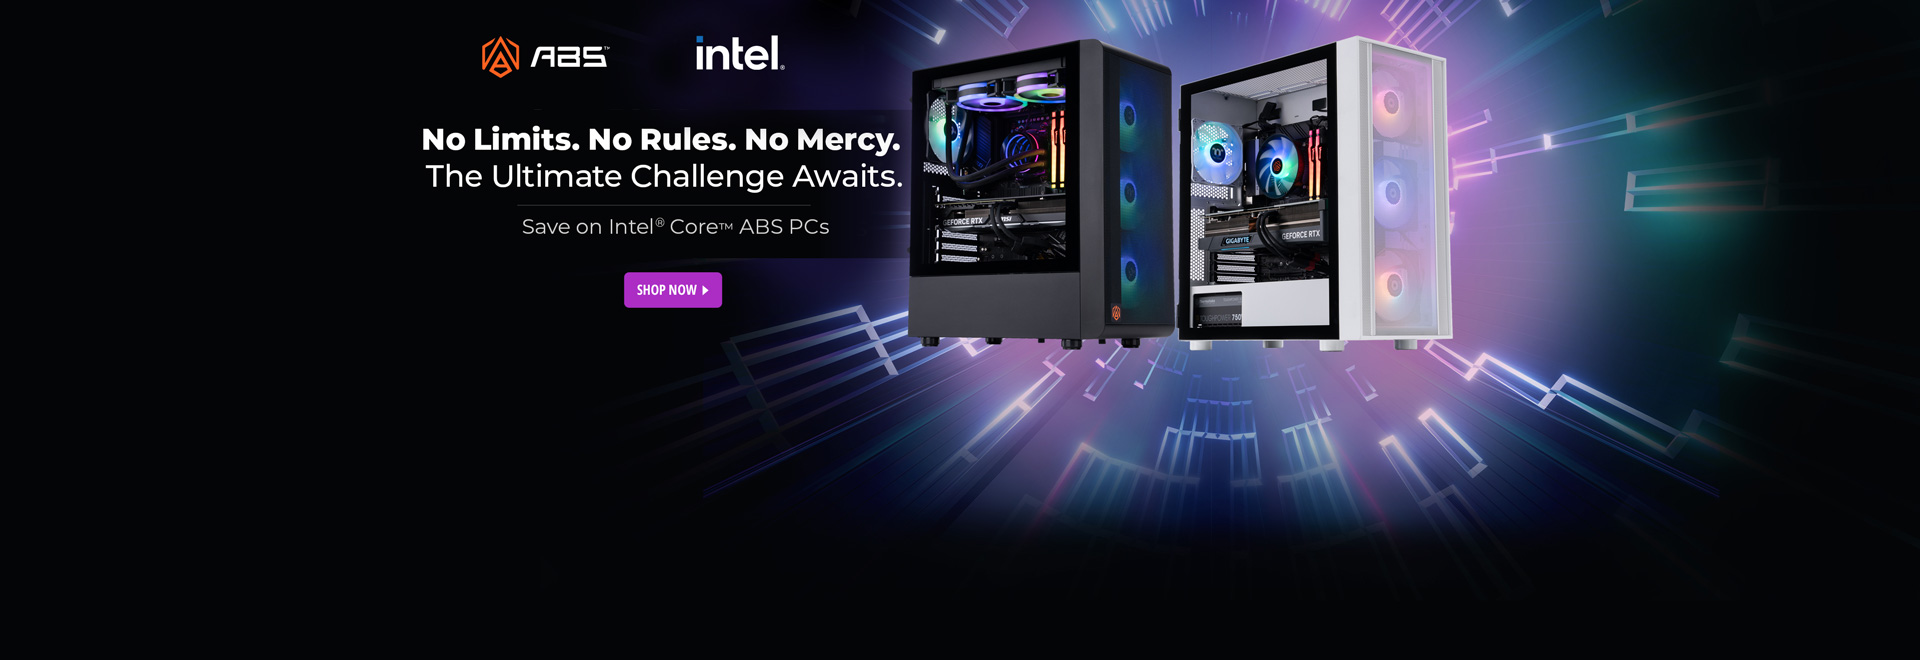 Save on Intel Core ABS PCs